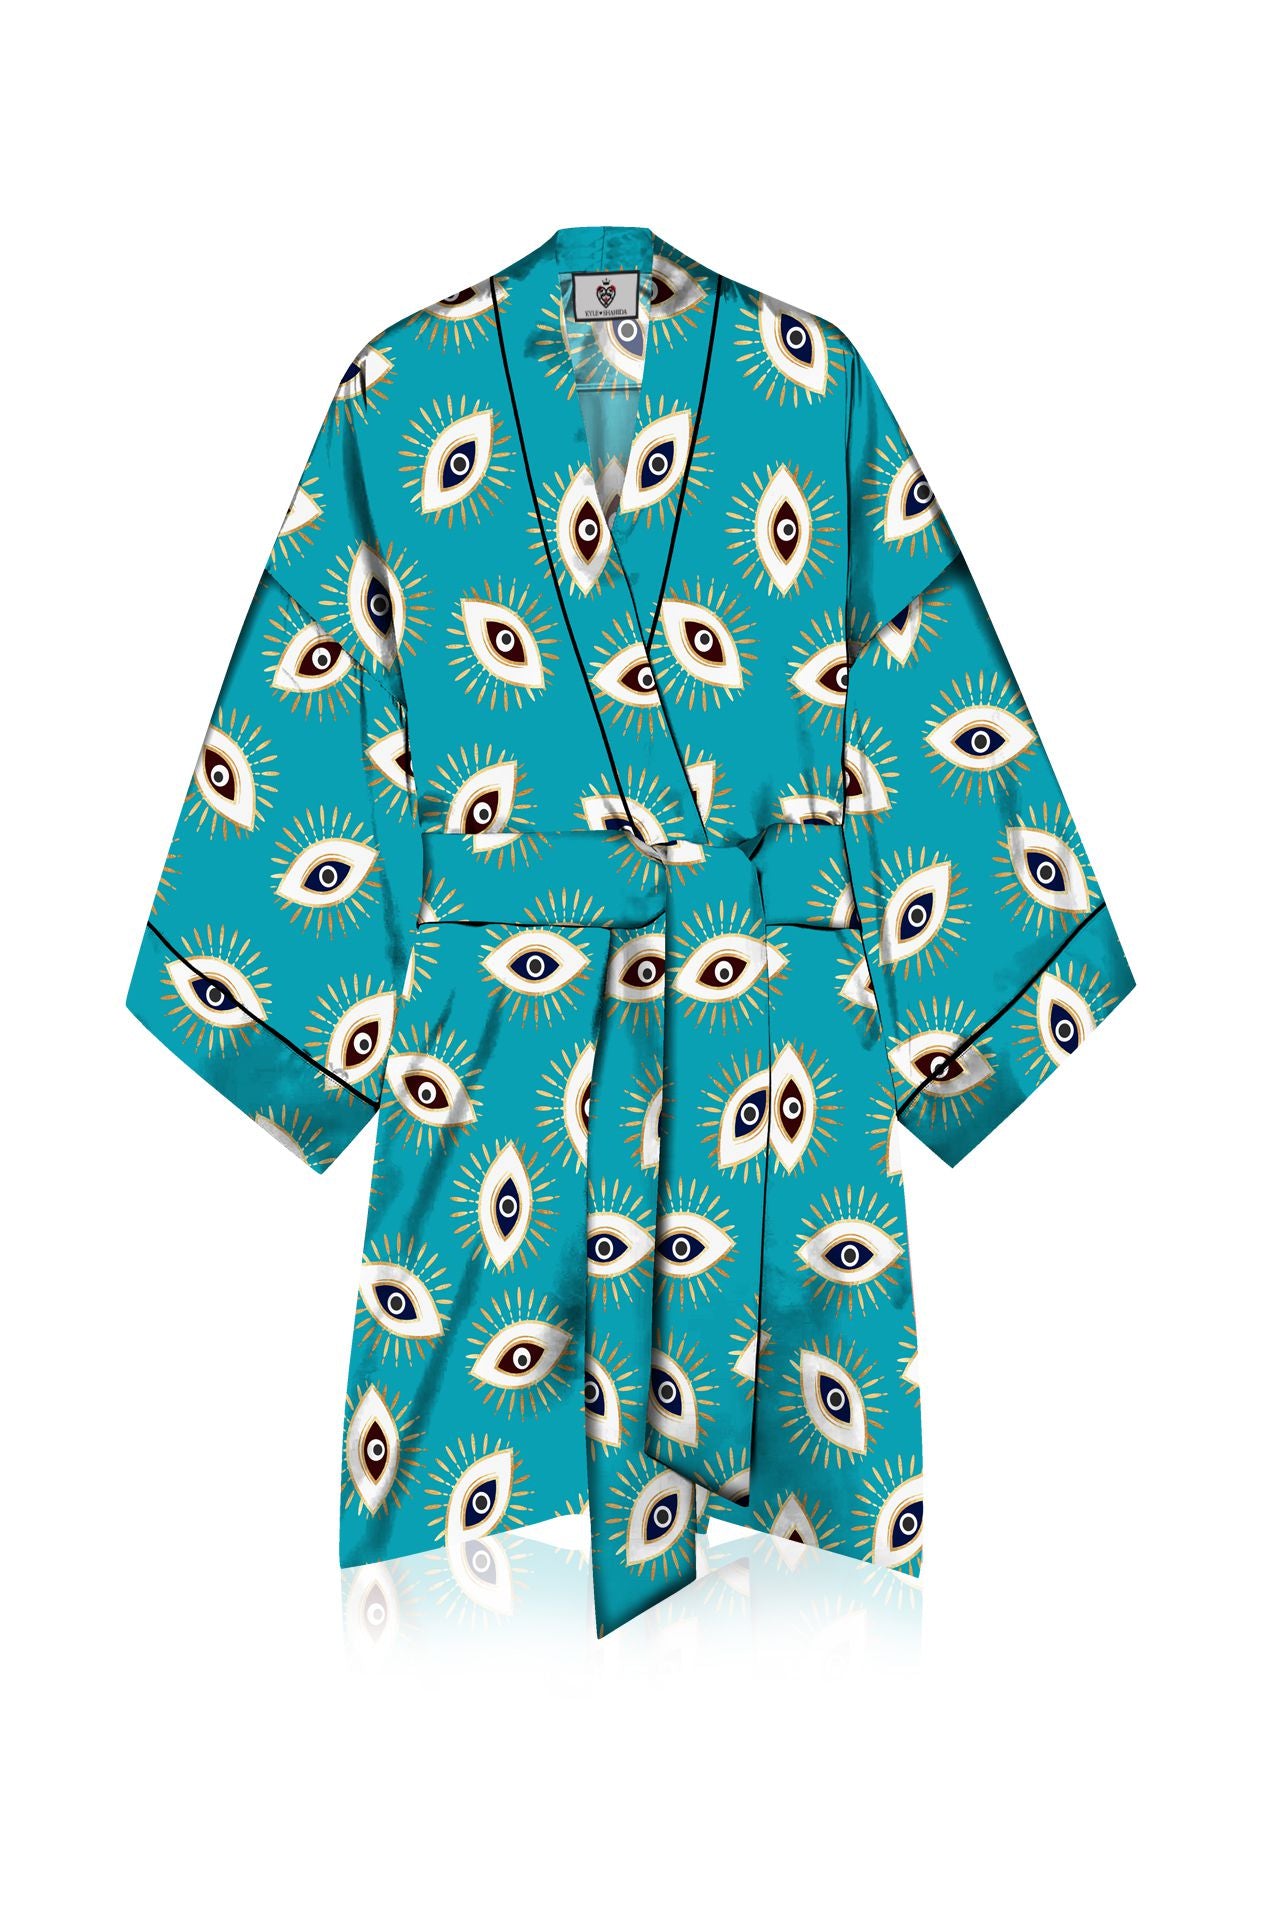 "short kimonos for women" "Kyle X Shahida" "short summer kimono" "printed silk robe"